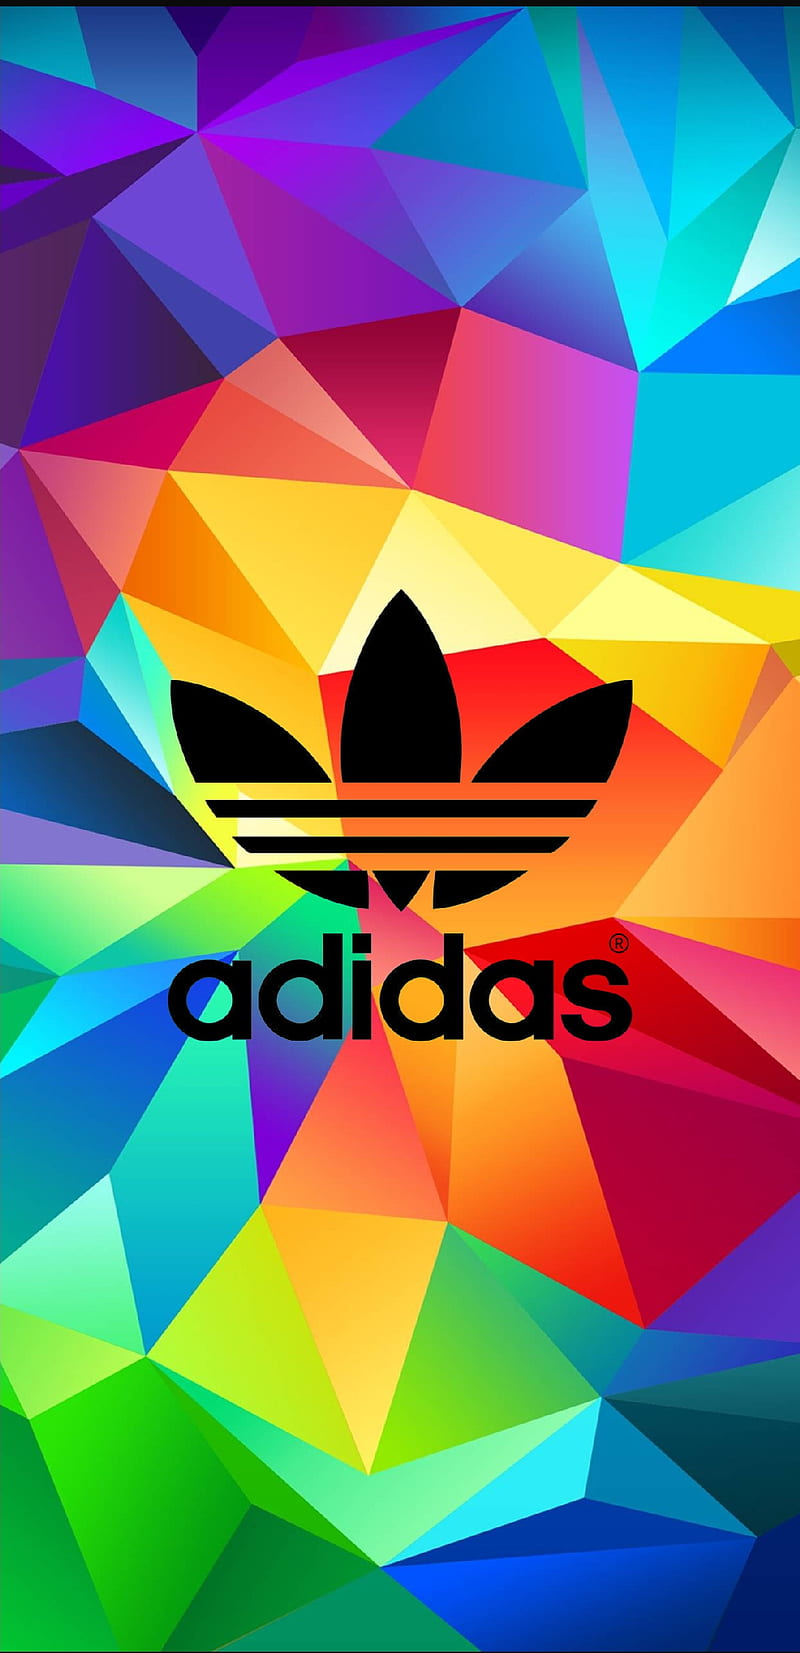 ADIDAS | Adidas wallpapers, Adidas logo wallpapers, Adidas iphone wallpaper